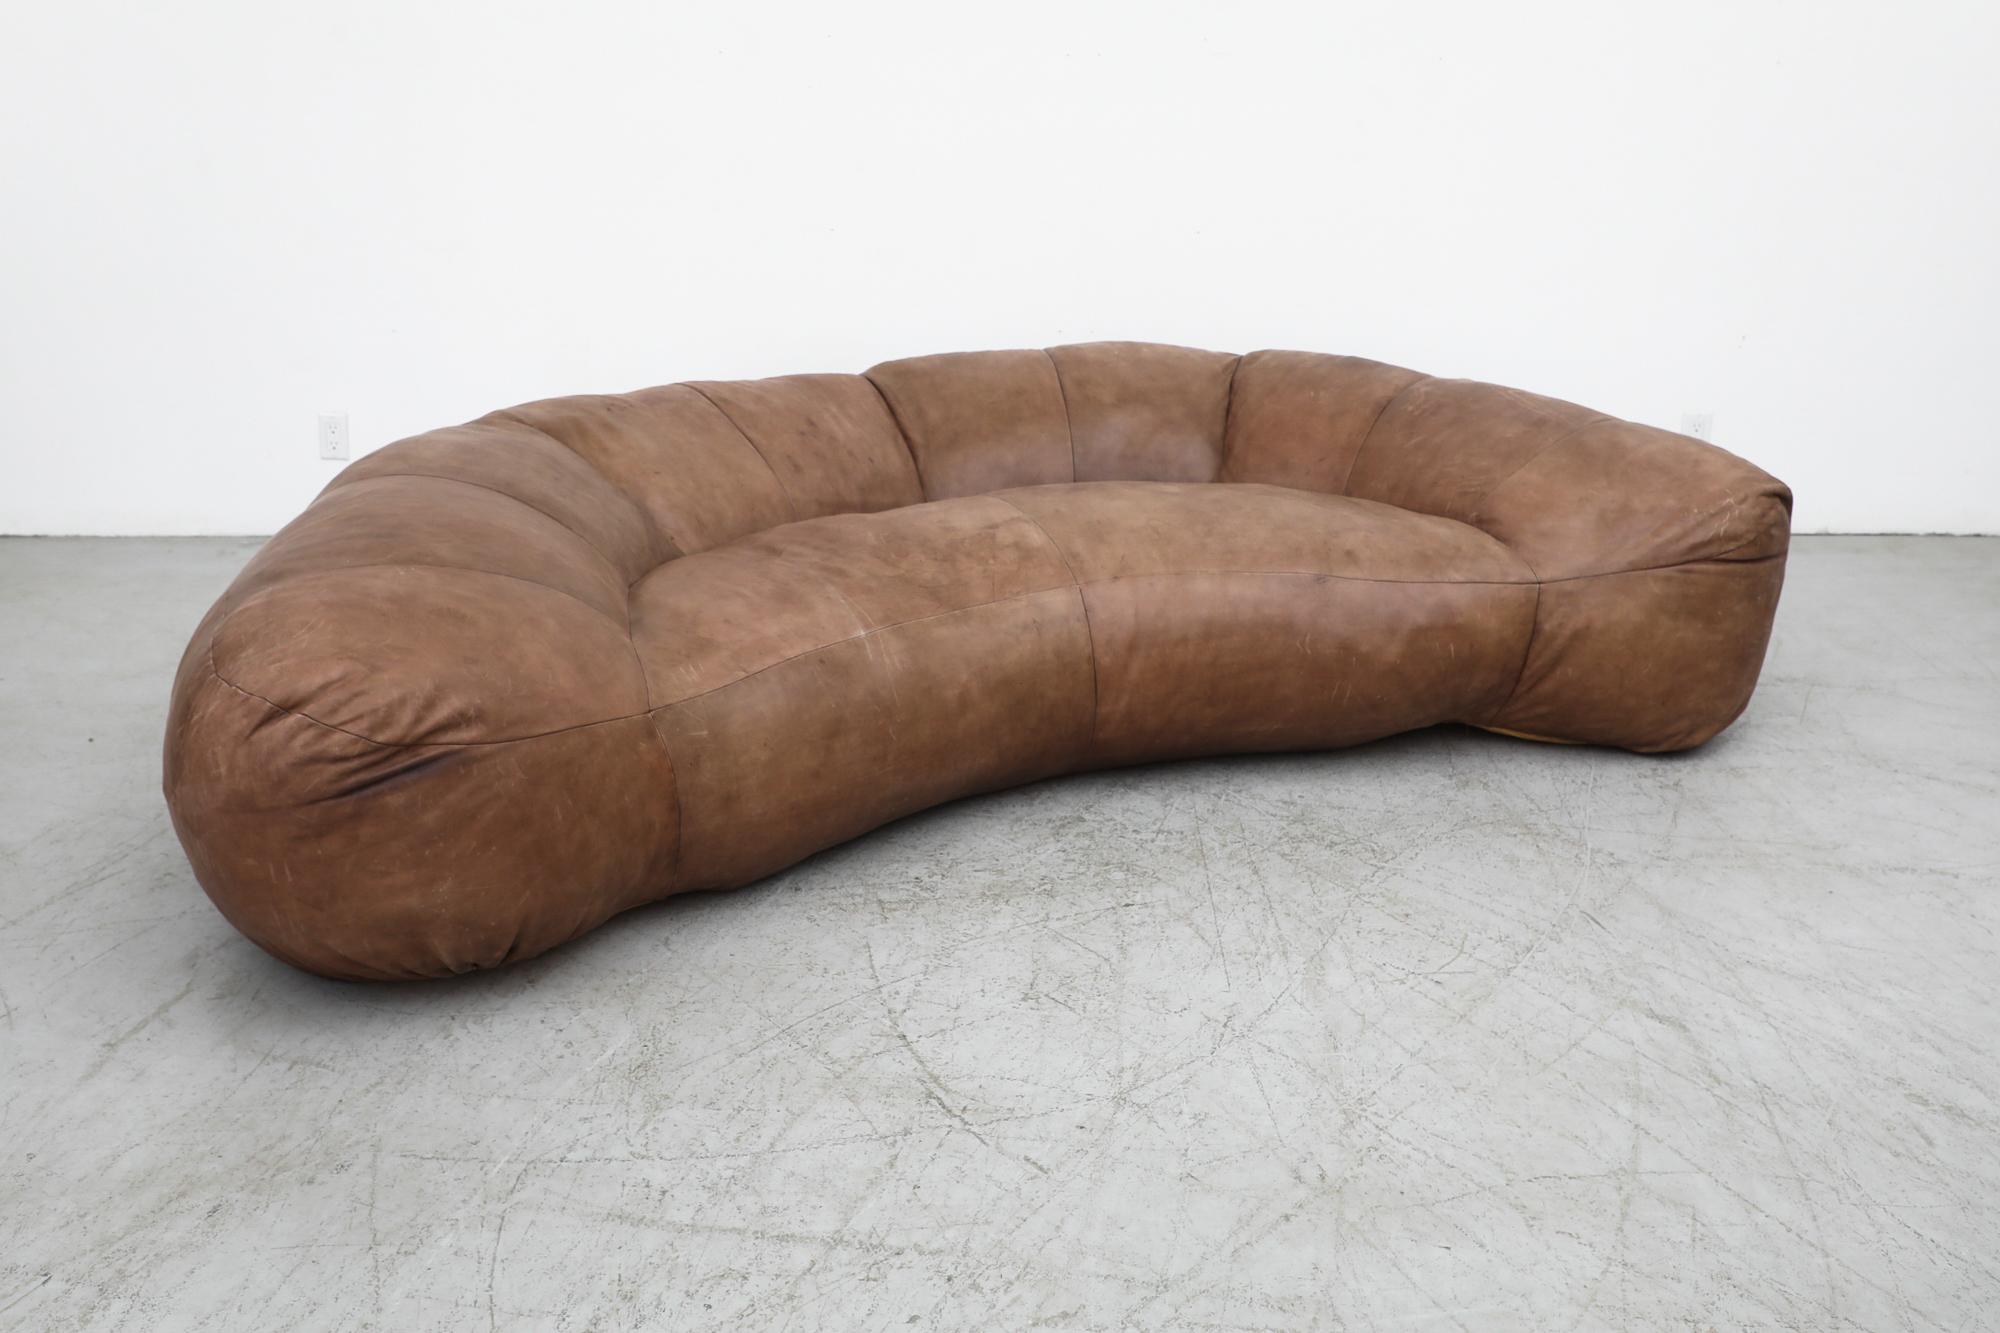 Raphael Raffel Brown Natural Leather Croissant Sofa for Honore Paris, 1970s For Sale 12